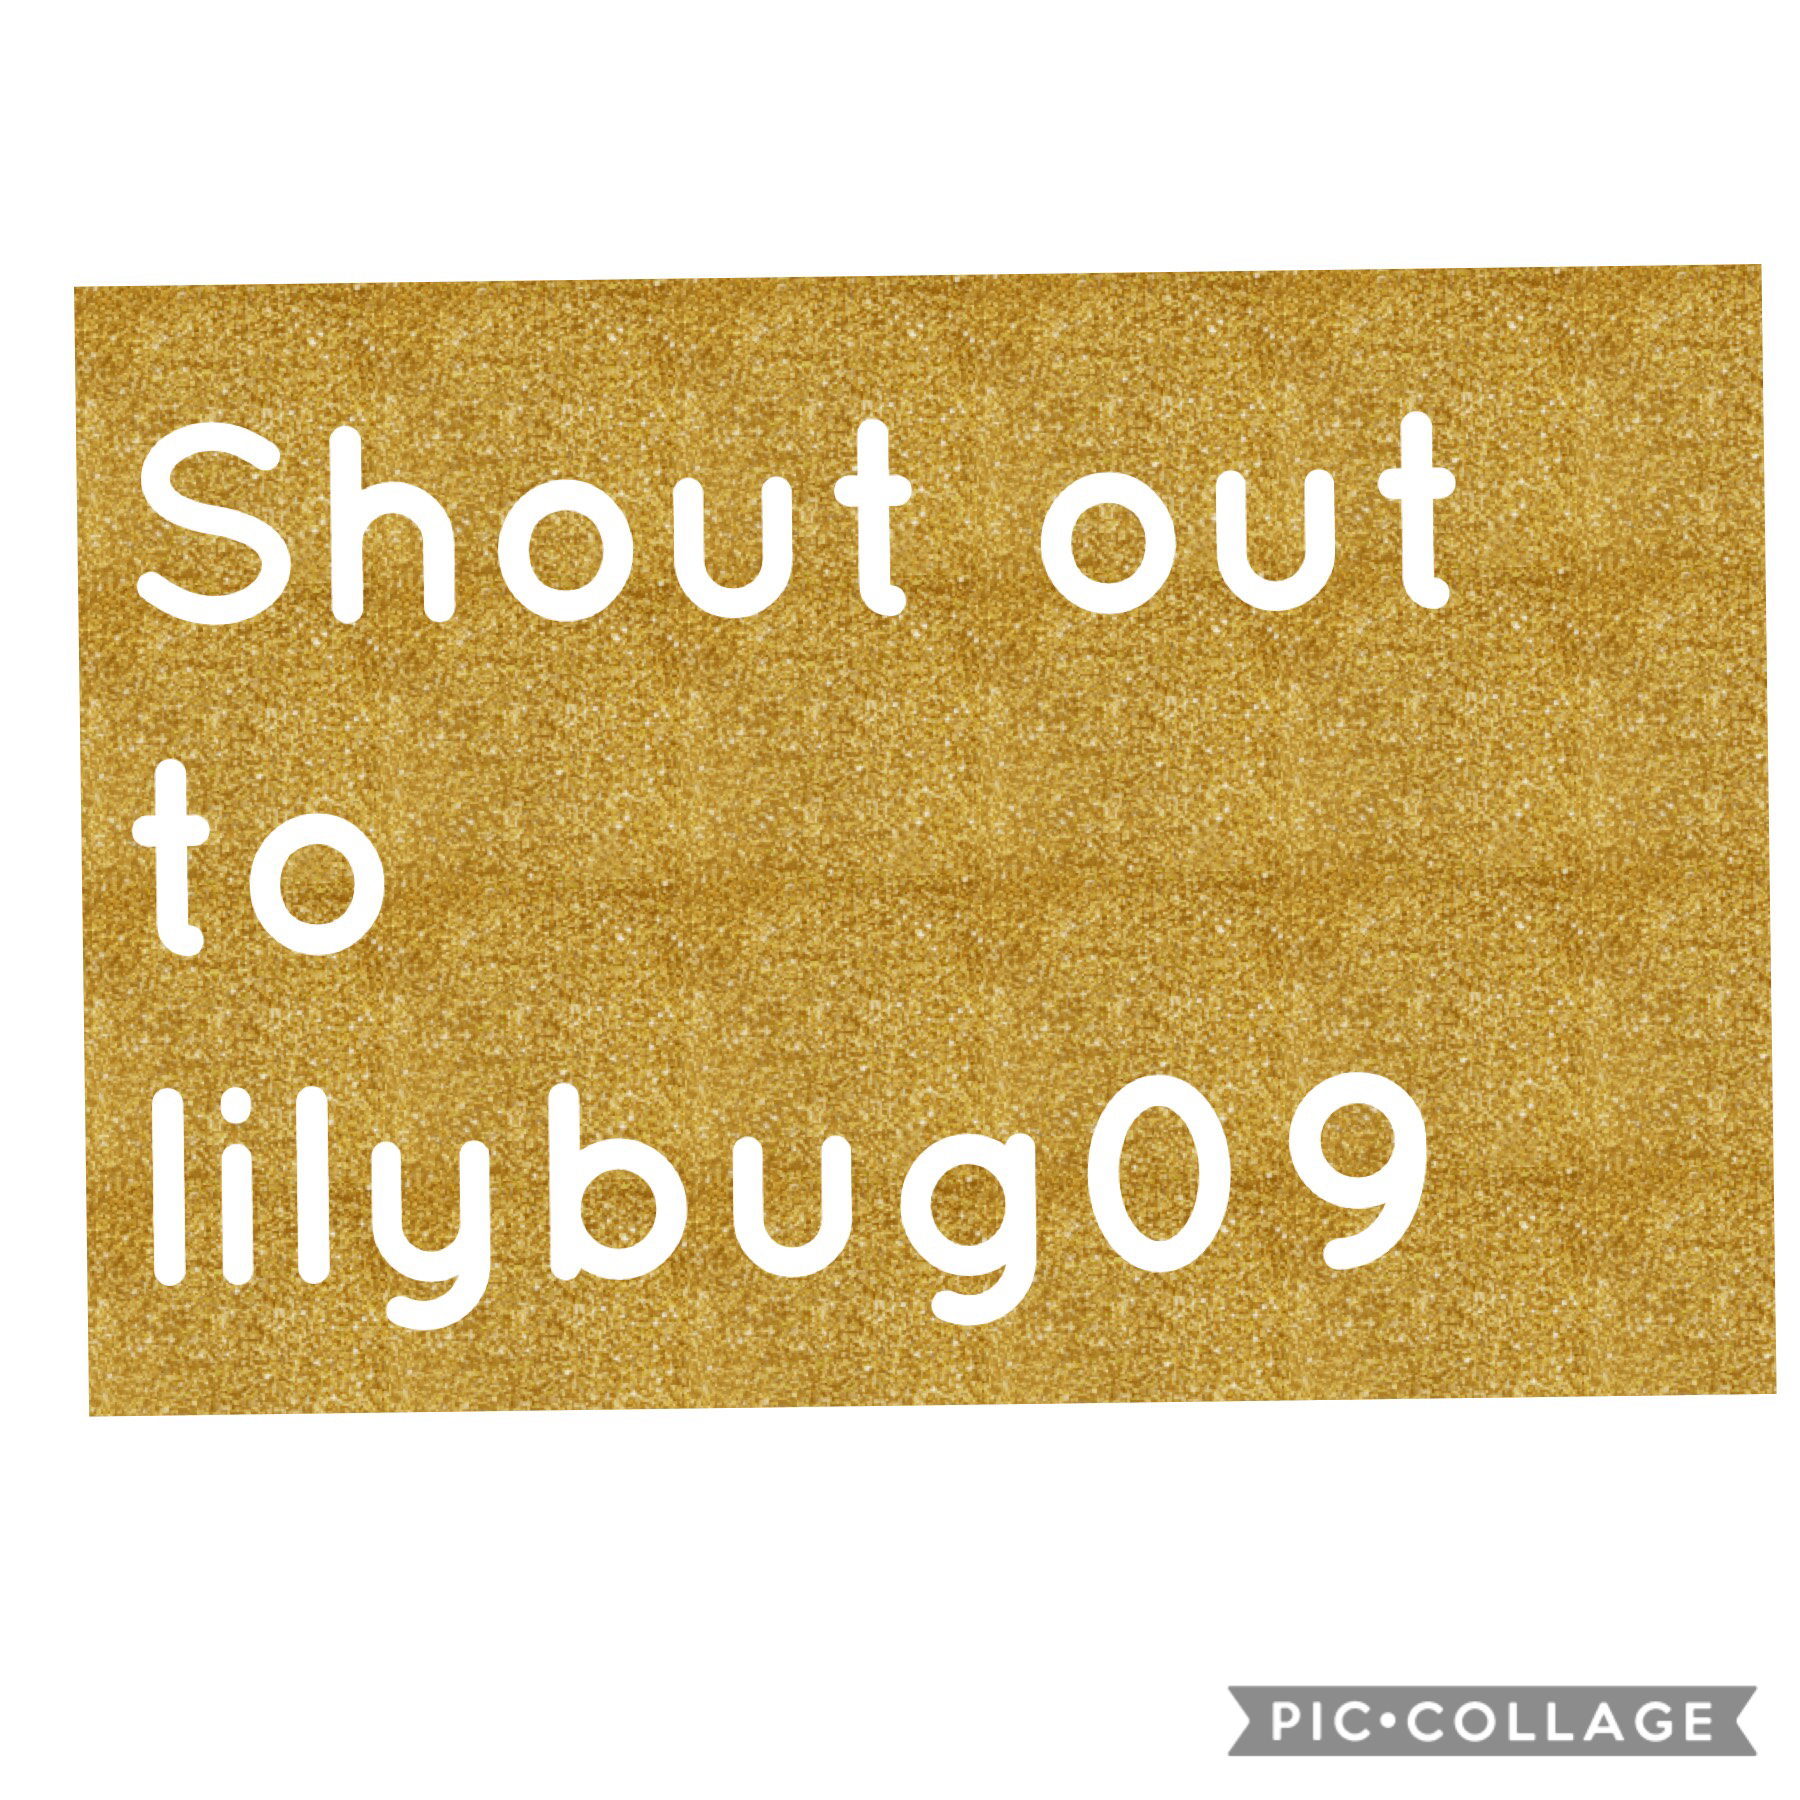 Lilybug09